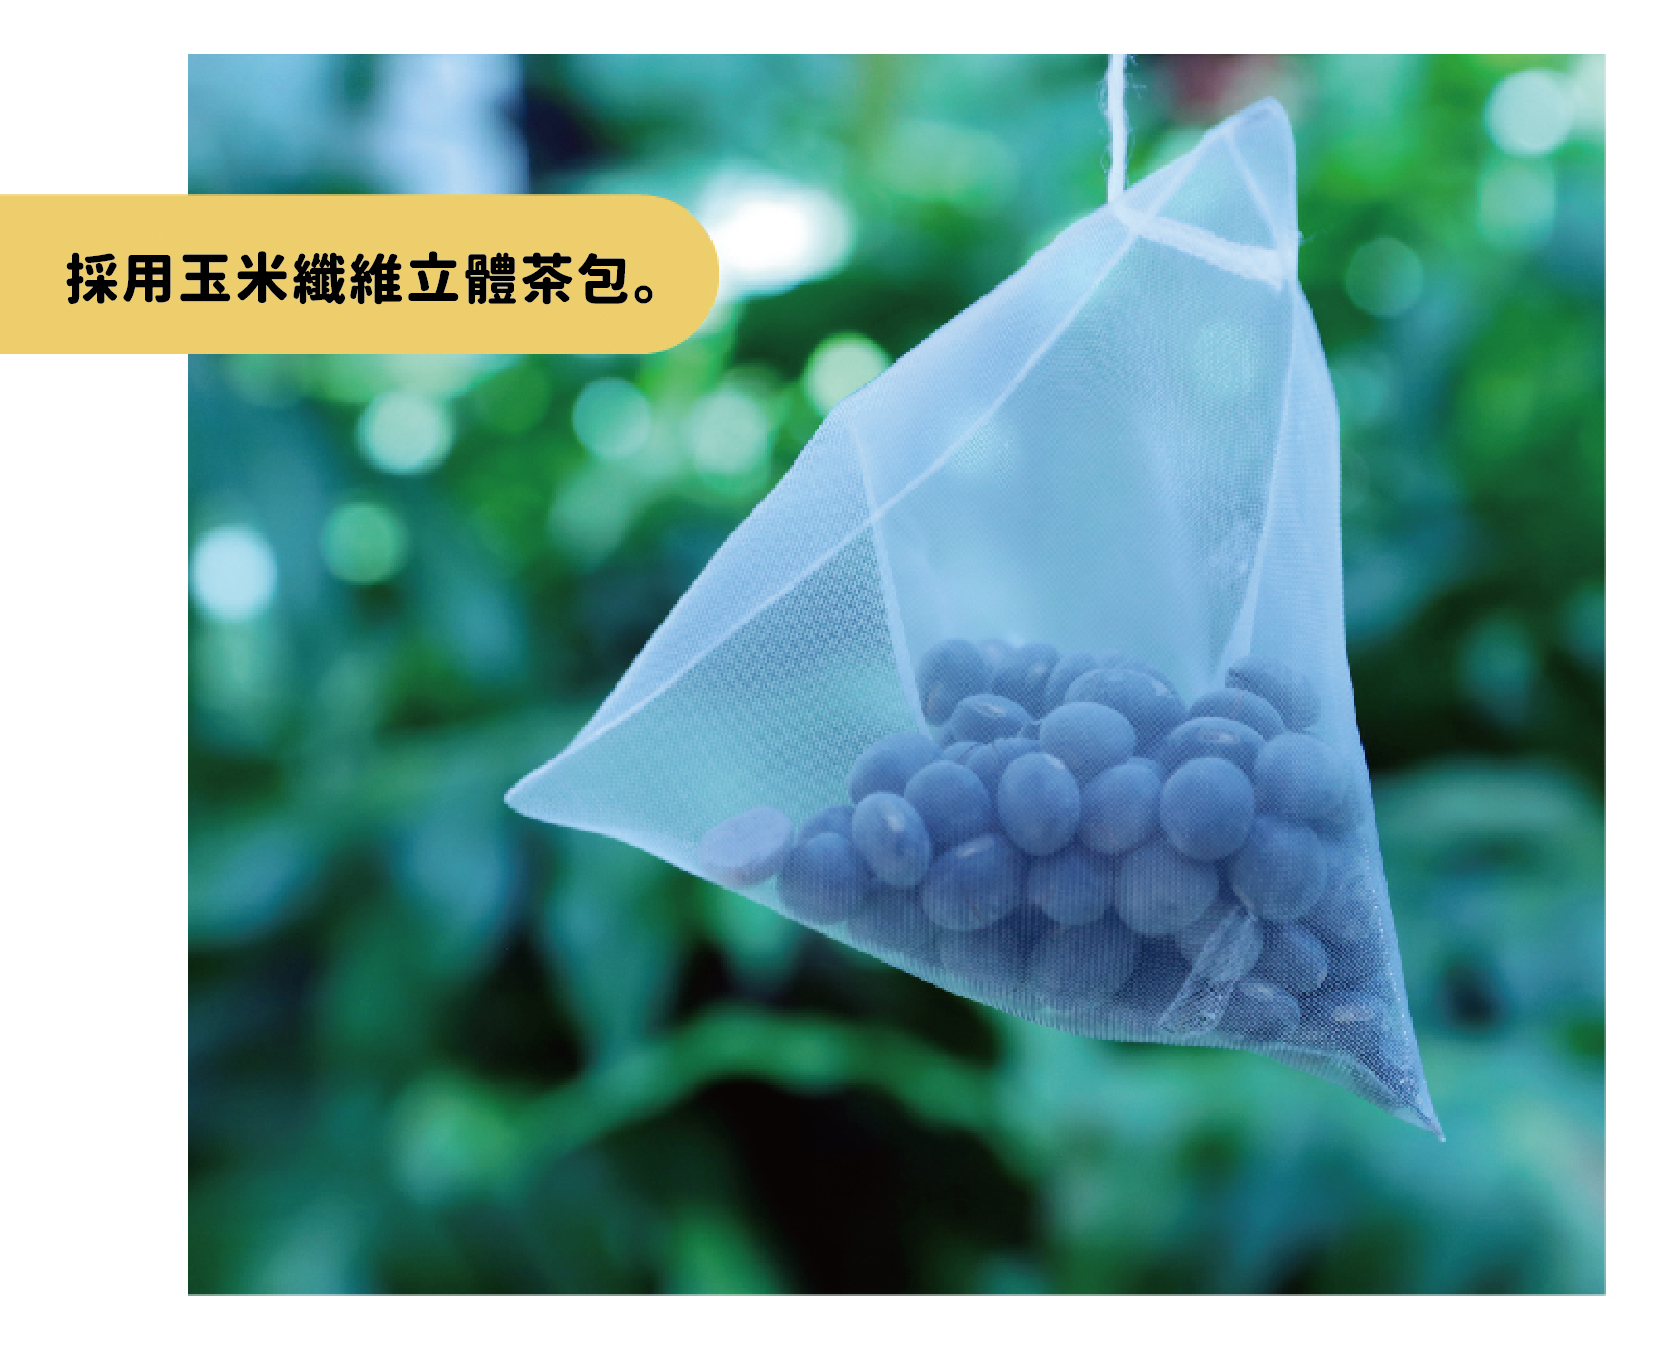 Taiwan local non-GMO green kernel black beans, hand-roasted with fine fire | Taiwan domestic non-GMO soy milk shop | HIDEKAWA